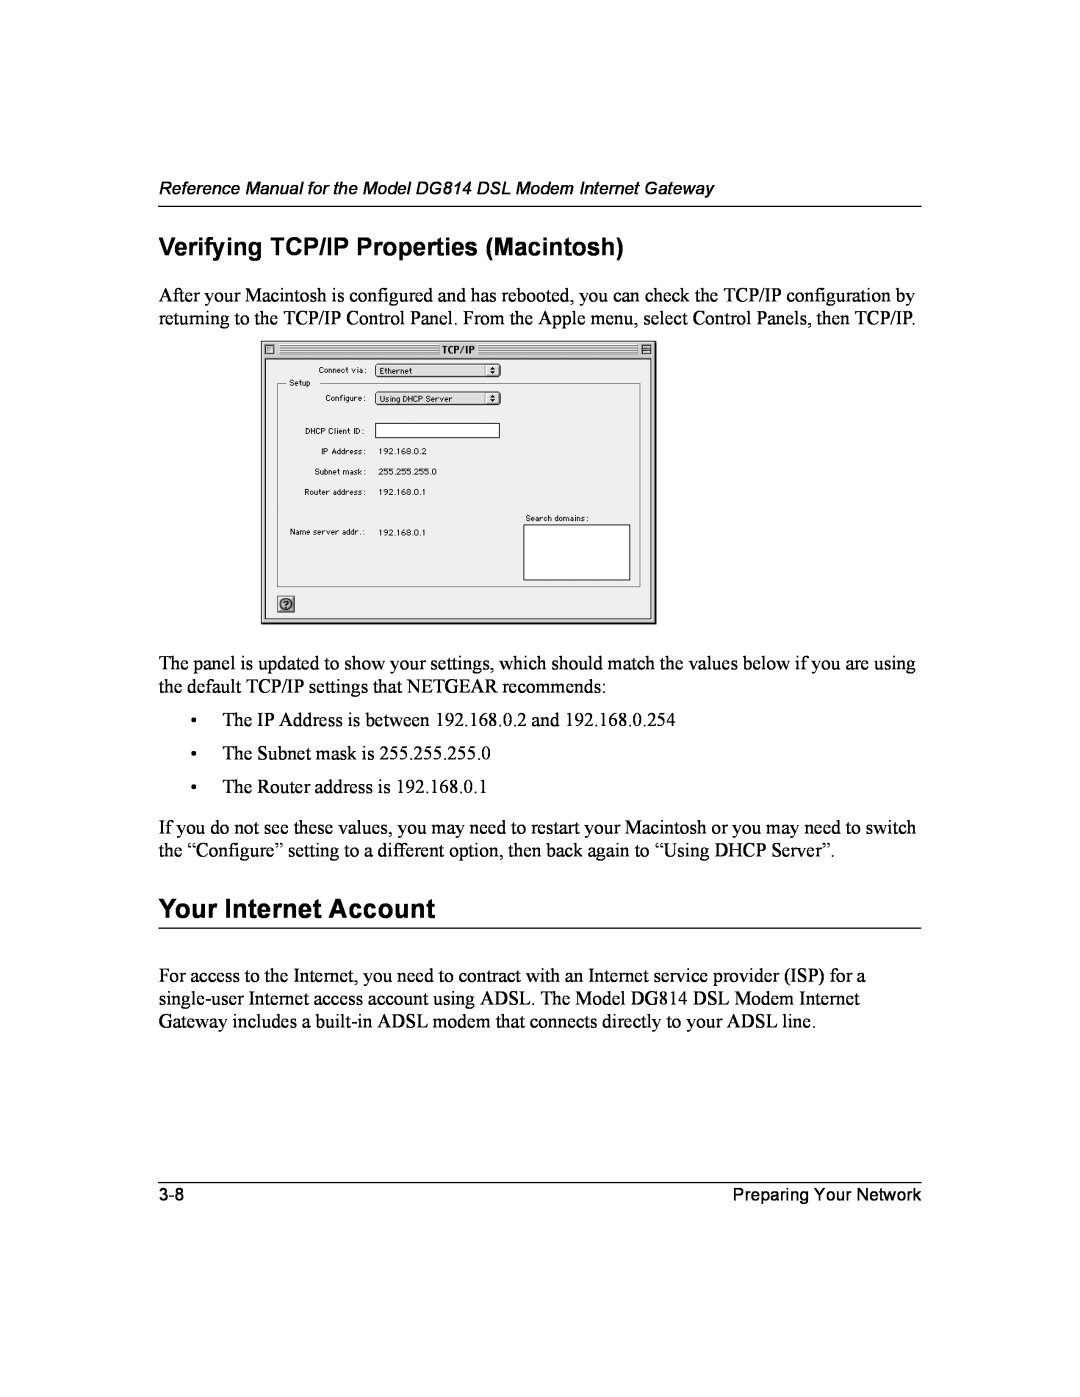 NETGEAR DG814 DSL manual Your Internet Account, Verifying TCP/IP Properties Macintosh 